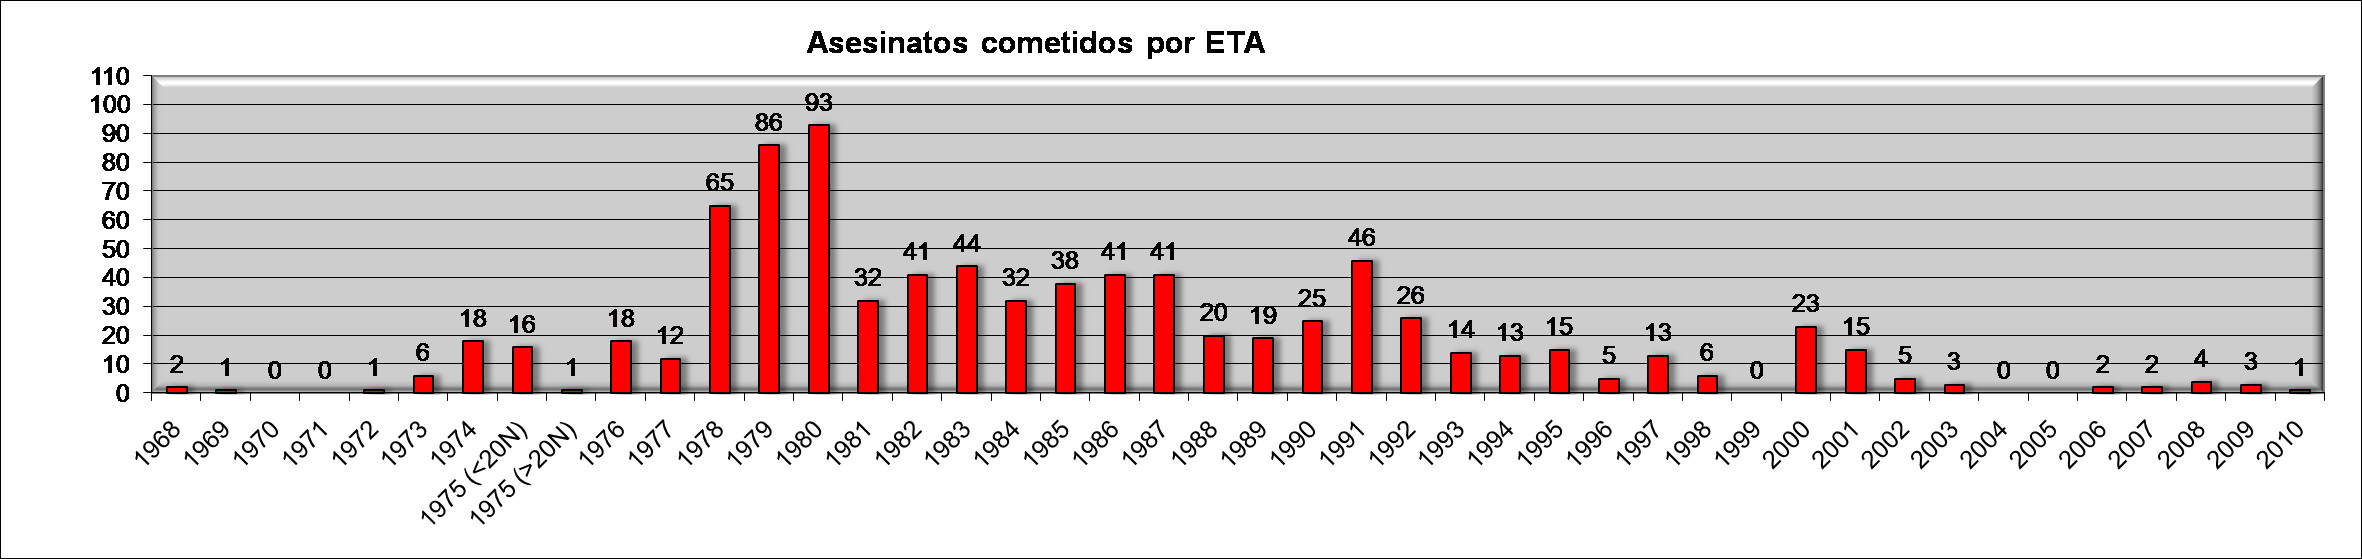 Evoluci%C3%B3n_asesinatos_cometidos_por_ETA.jpg